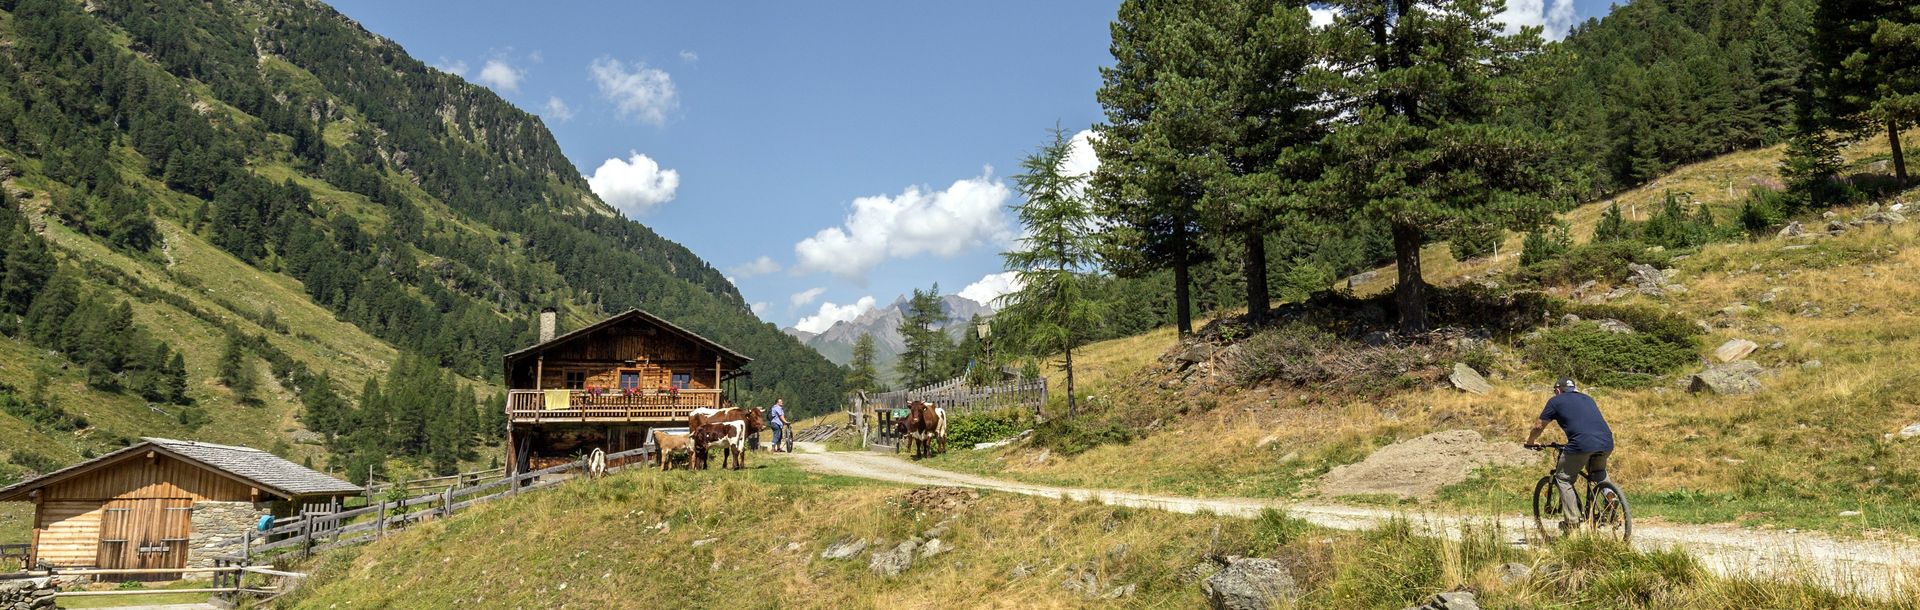 Defereggental, Radfahren und Mountainbiken, Oberhausalm, Bild NPHT TVB Osttirol_Bardelot Jean Paul